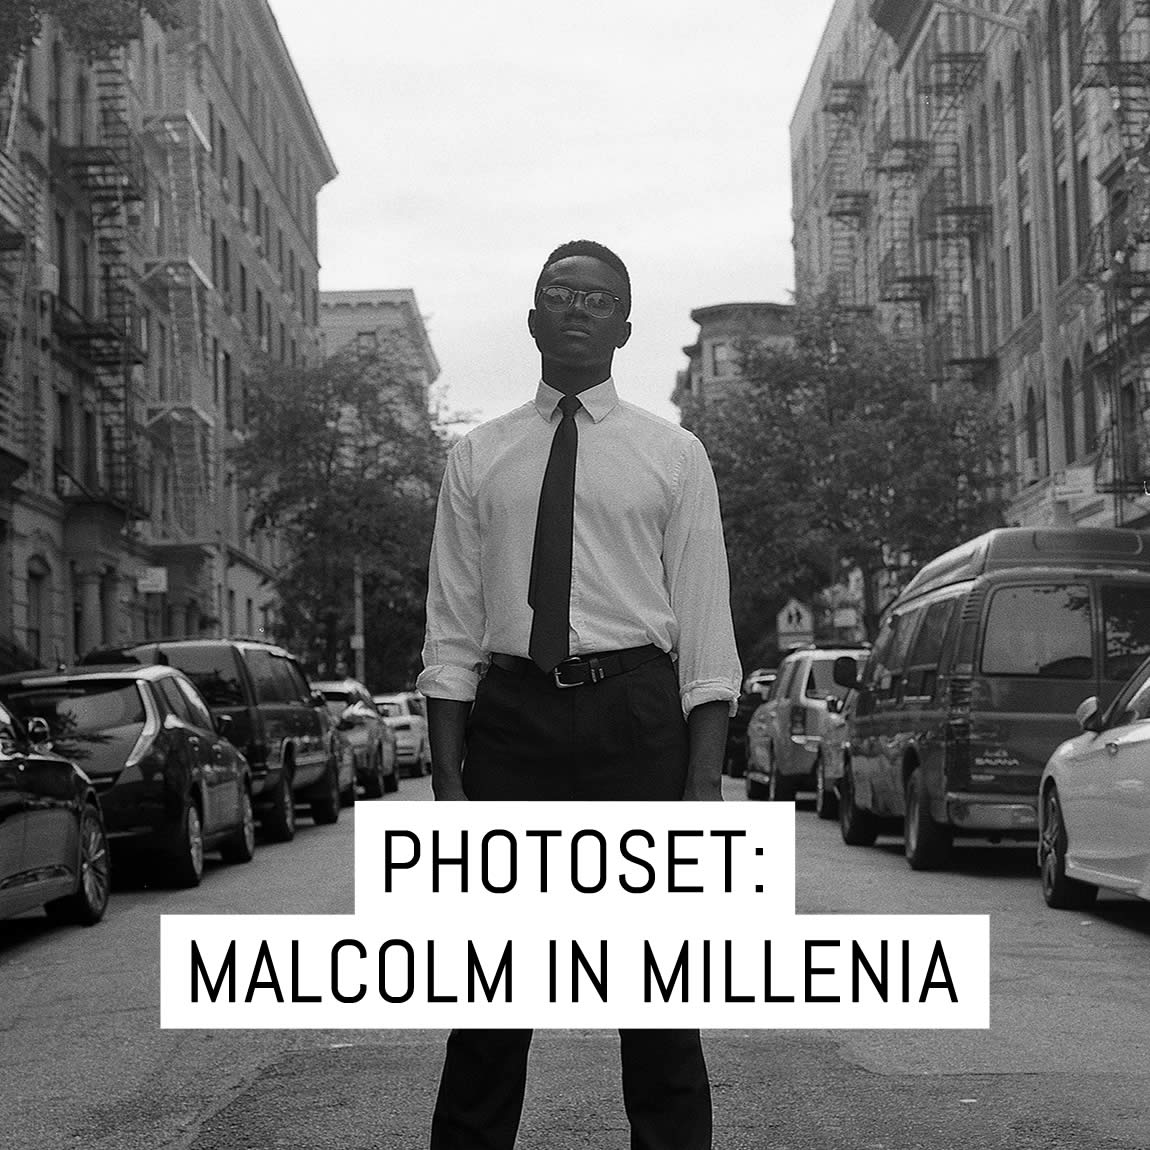 Photoset: Malcolm in Millennia